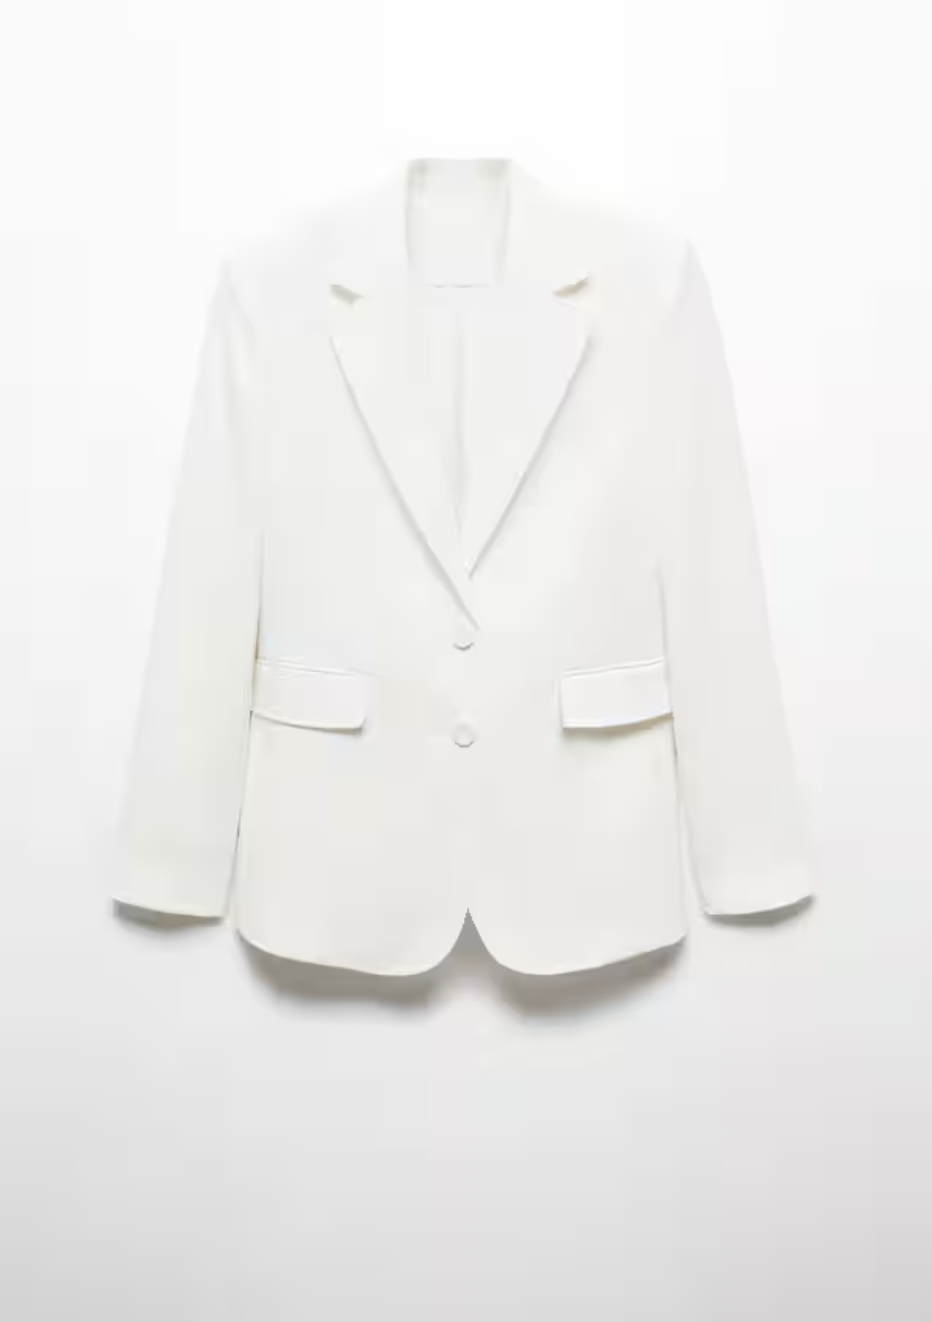 Mango straight fit suit blazer on a plain backdrop